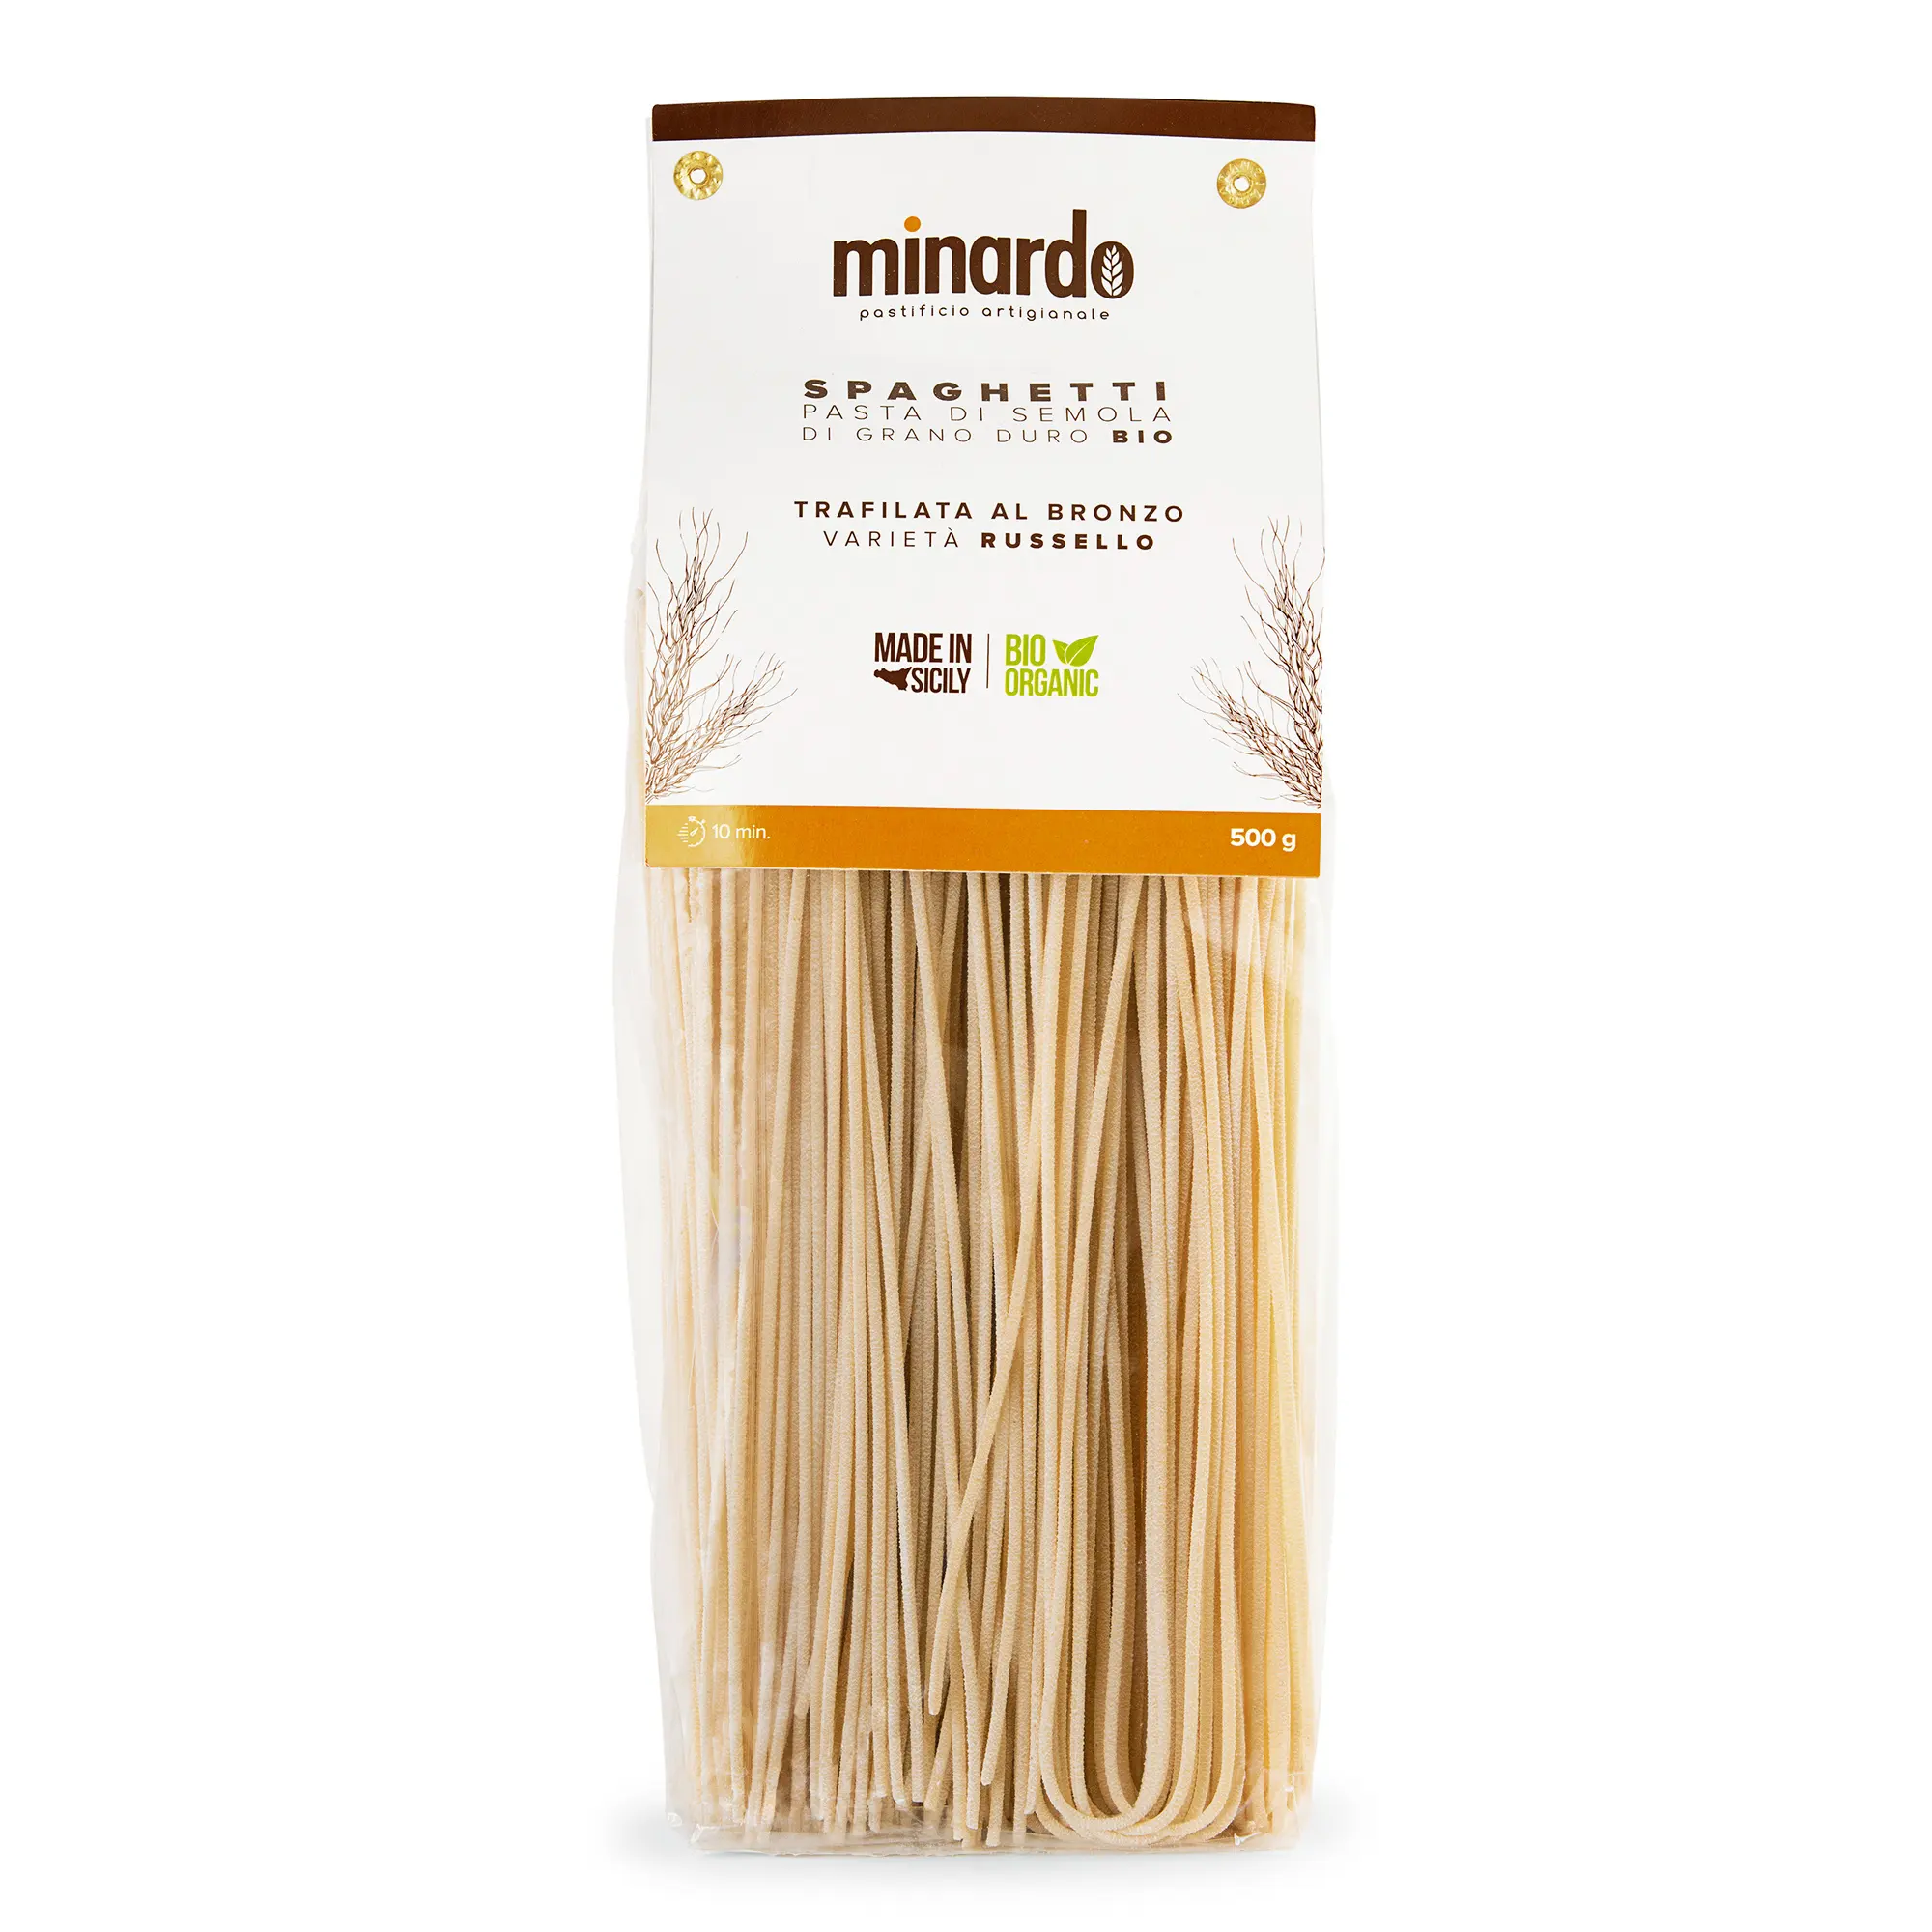 Pasta organik spaghetti durum wheat - artigianal pasta berkualitas tinggi untuk pecinta makanan